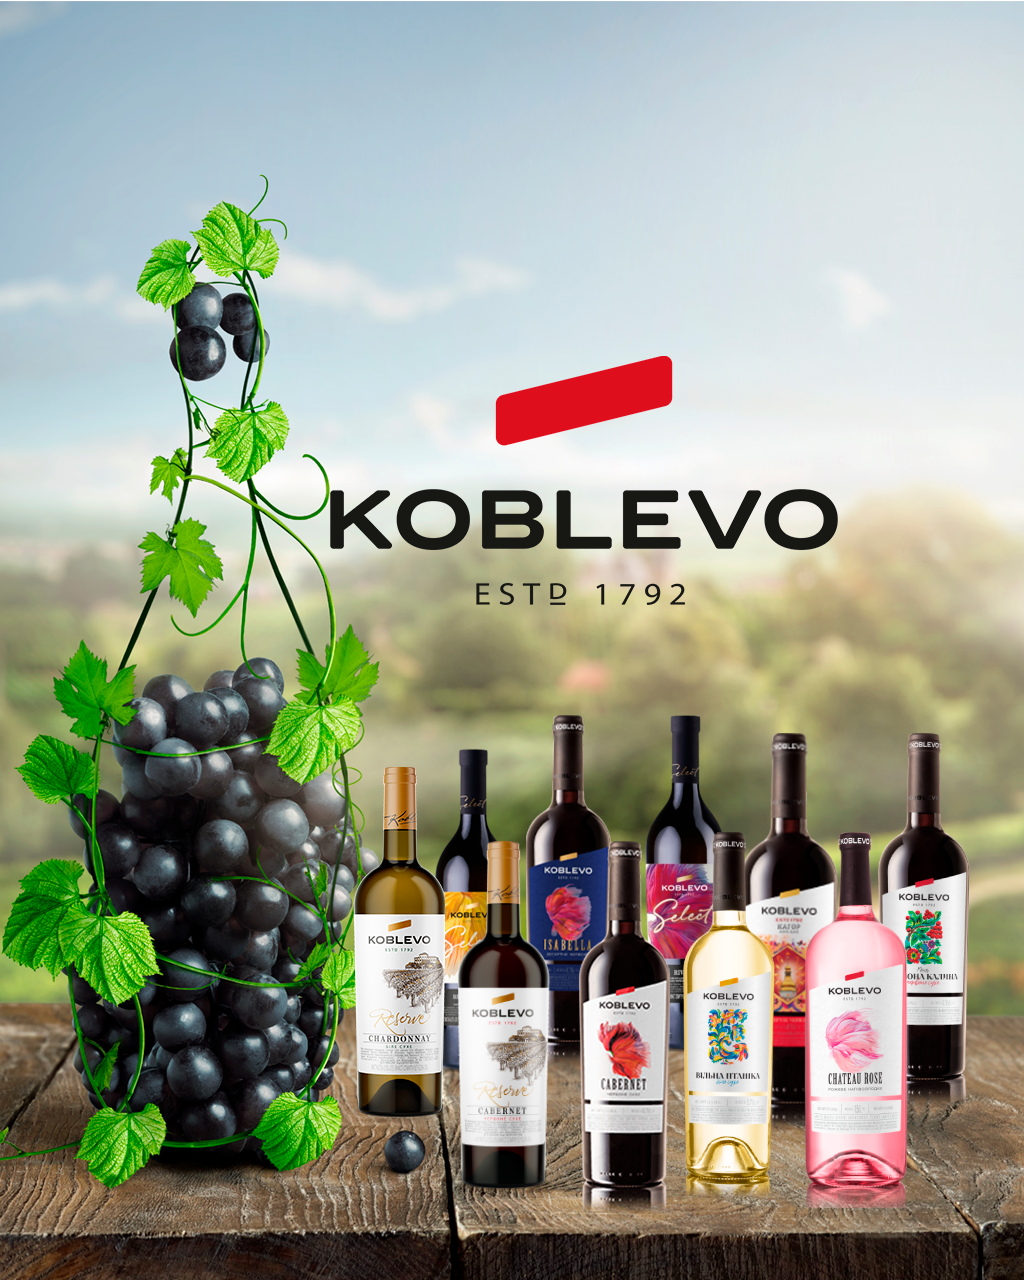 KOBLEVO winery